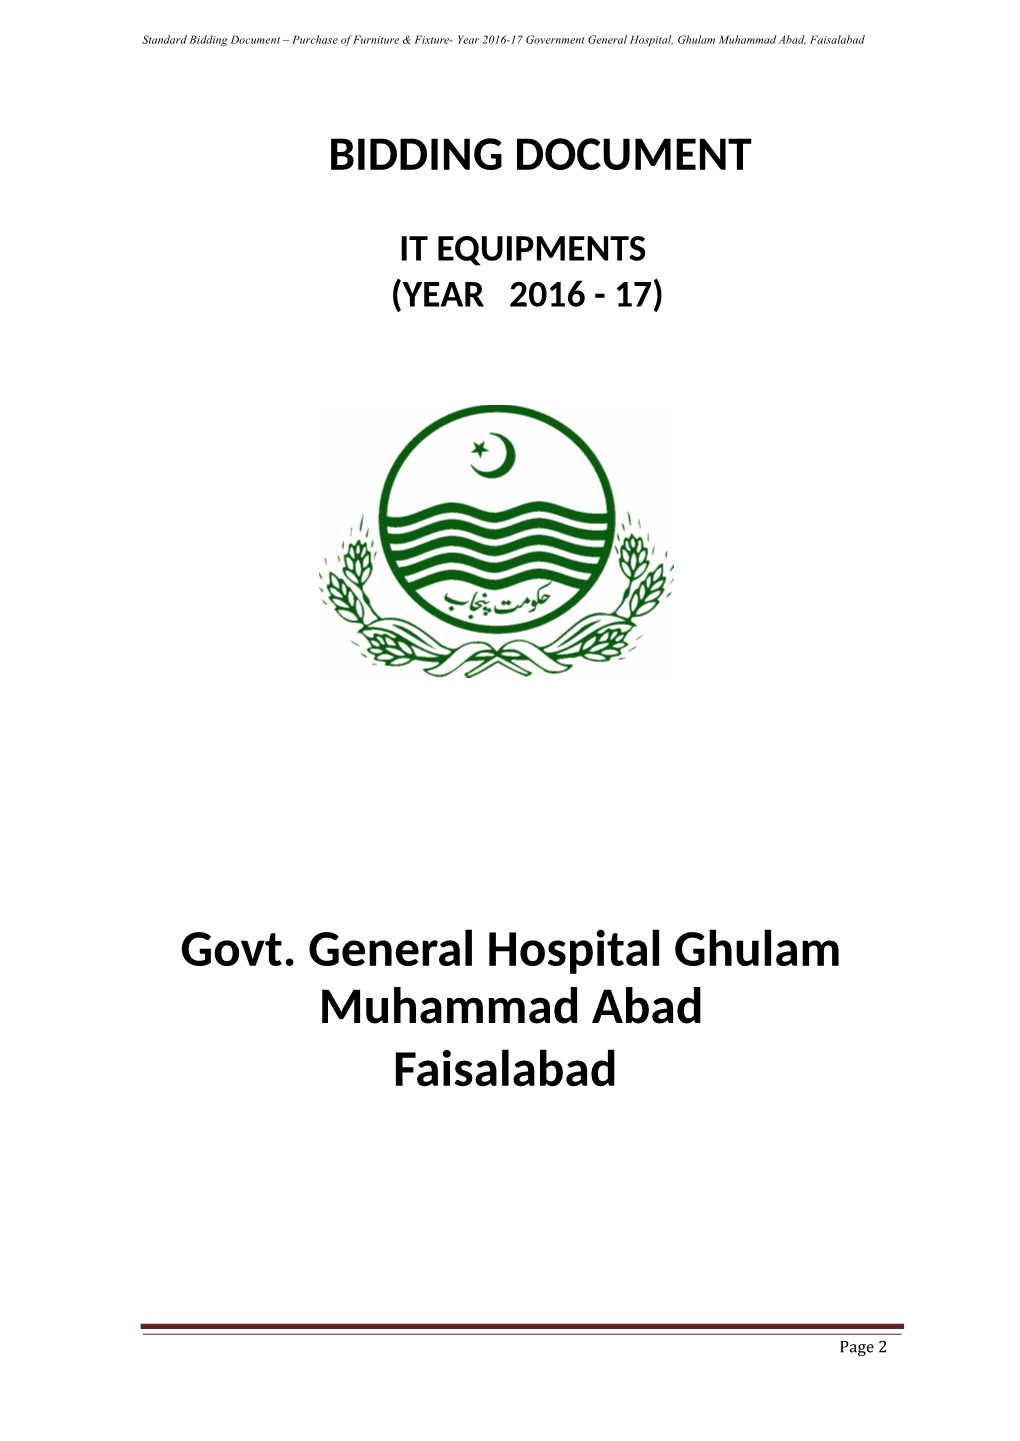 Govt. General Hospital Ghulam Muhammad Abad Faisalabad